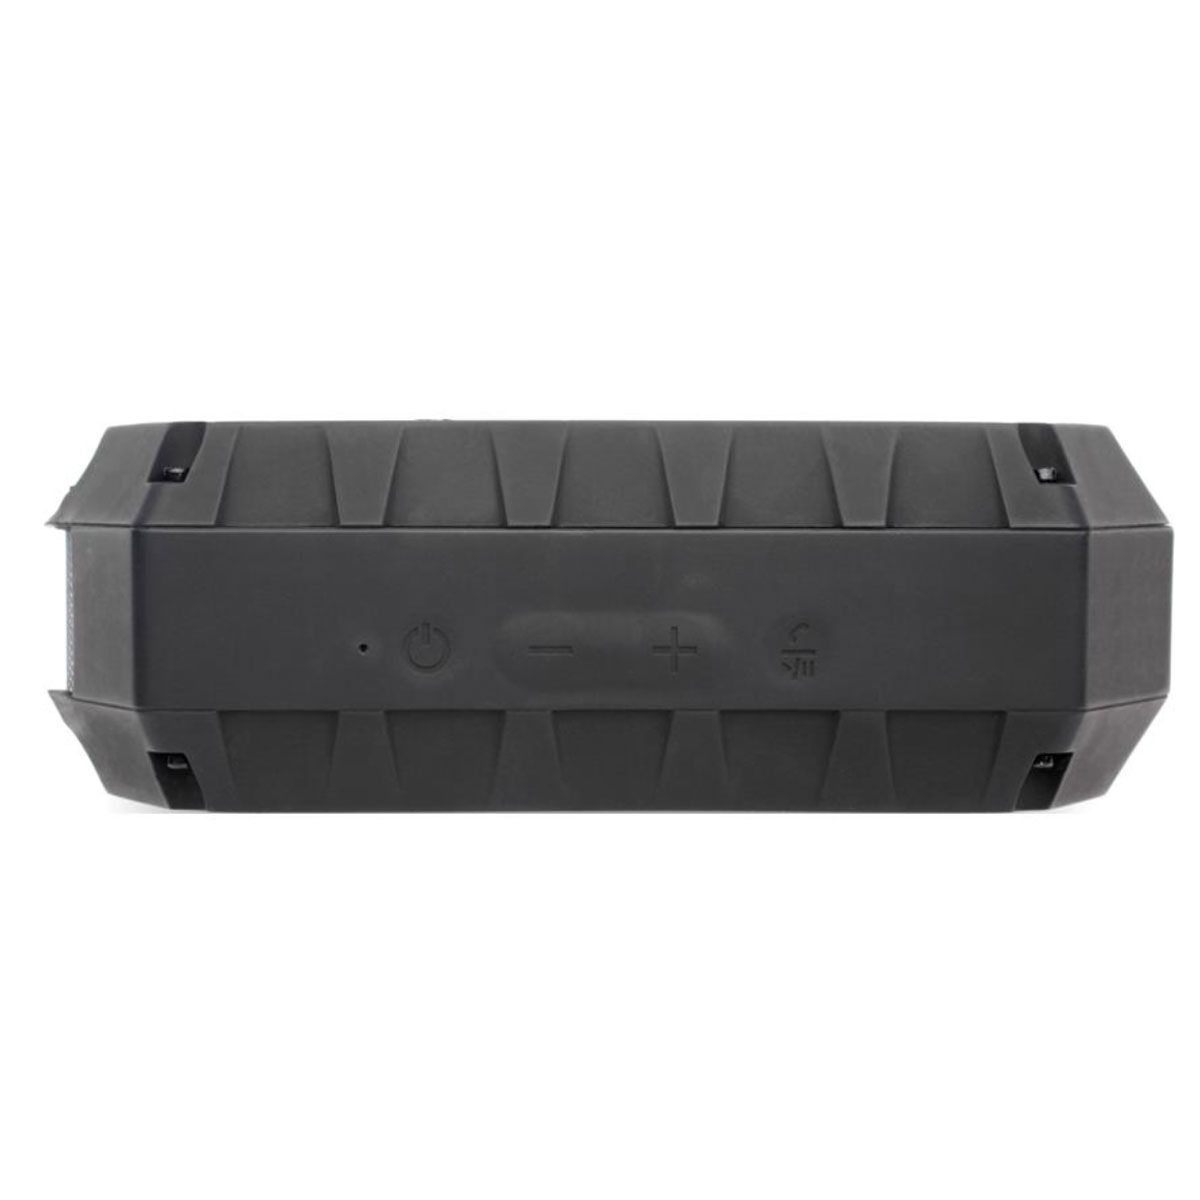 Soundcast VG1
Waterproof portable Bluetooth® speaker, back view